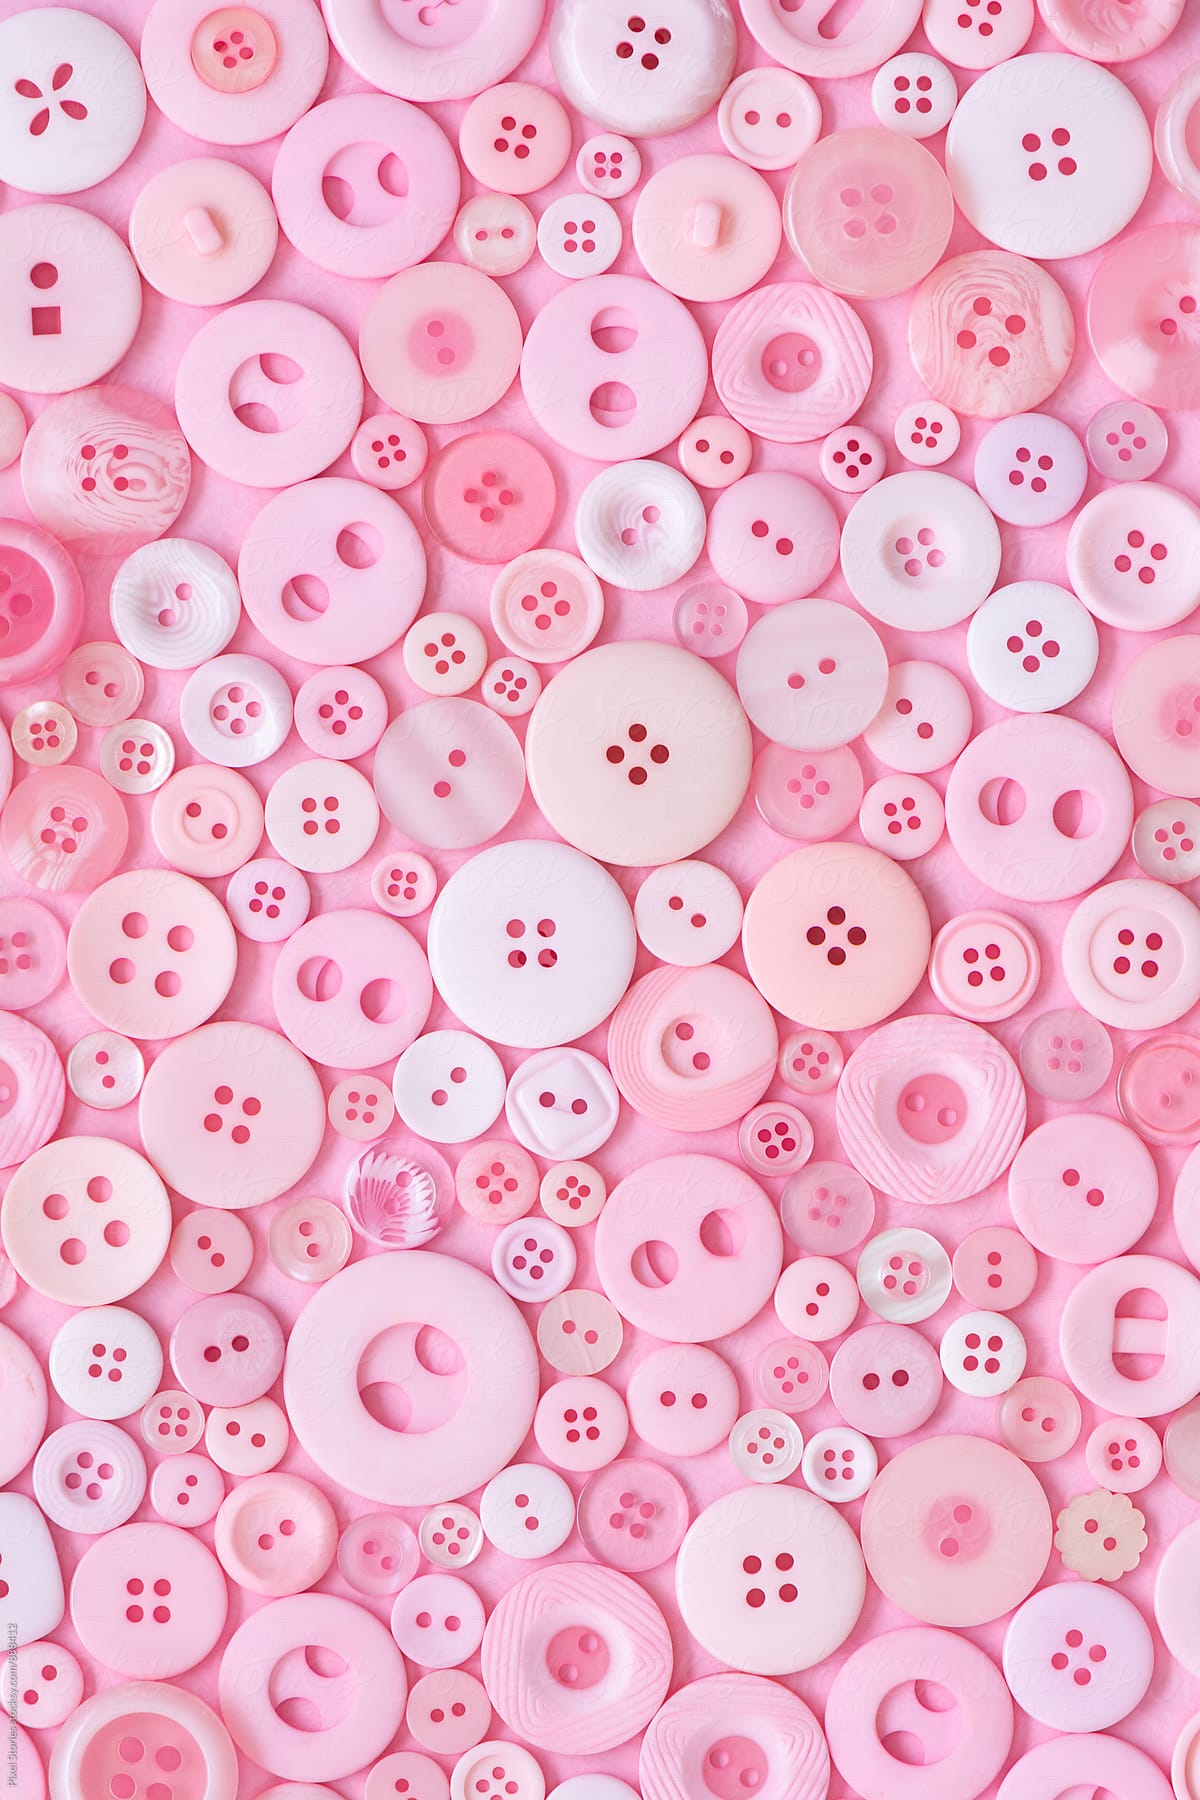 Pink Buttons Background» del colaborador de Stocksy «Pixel Stories